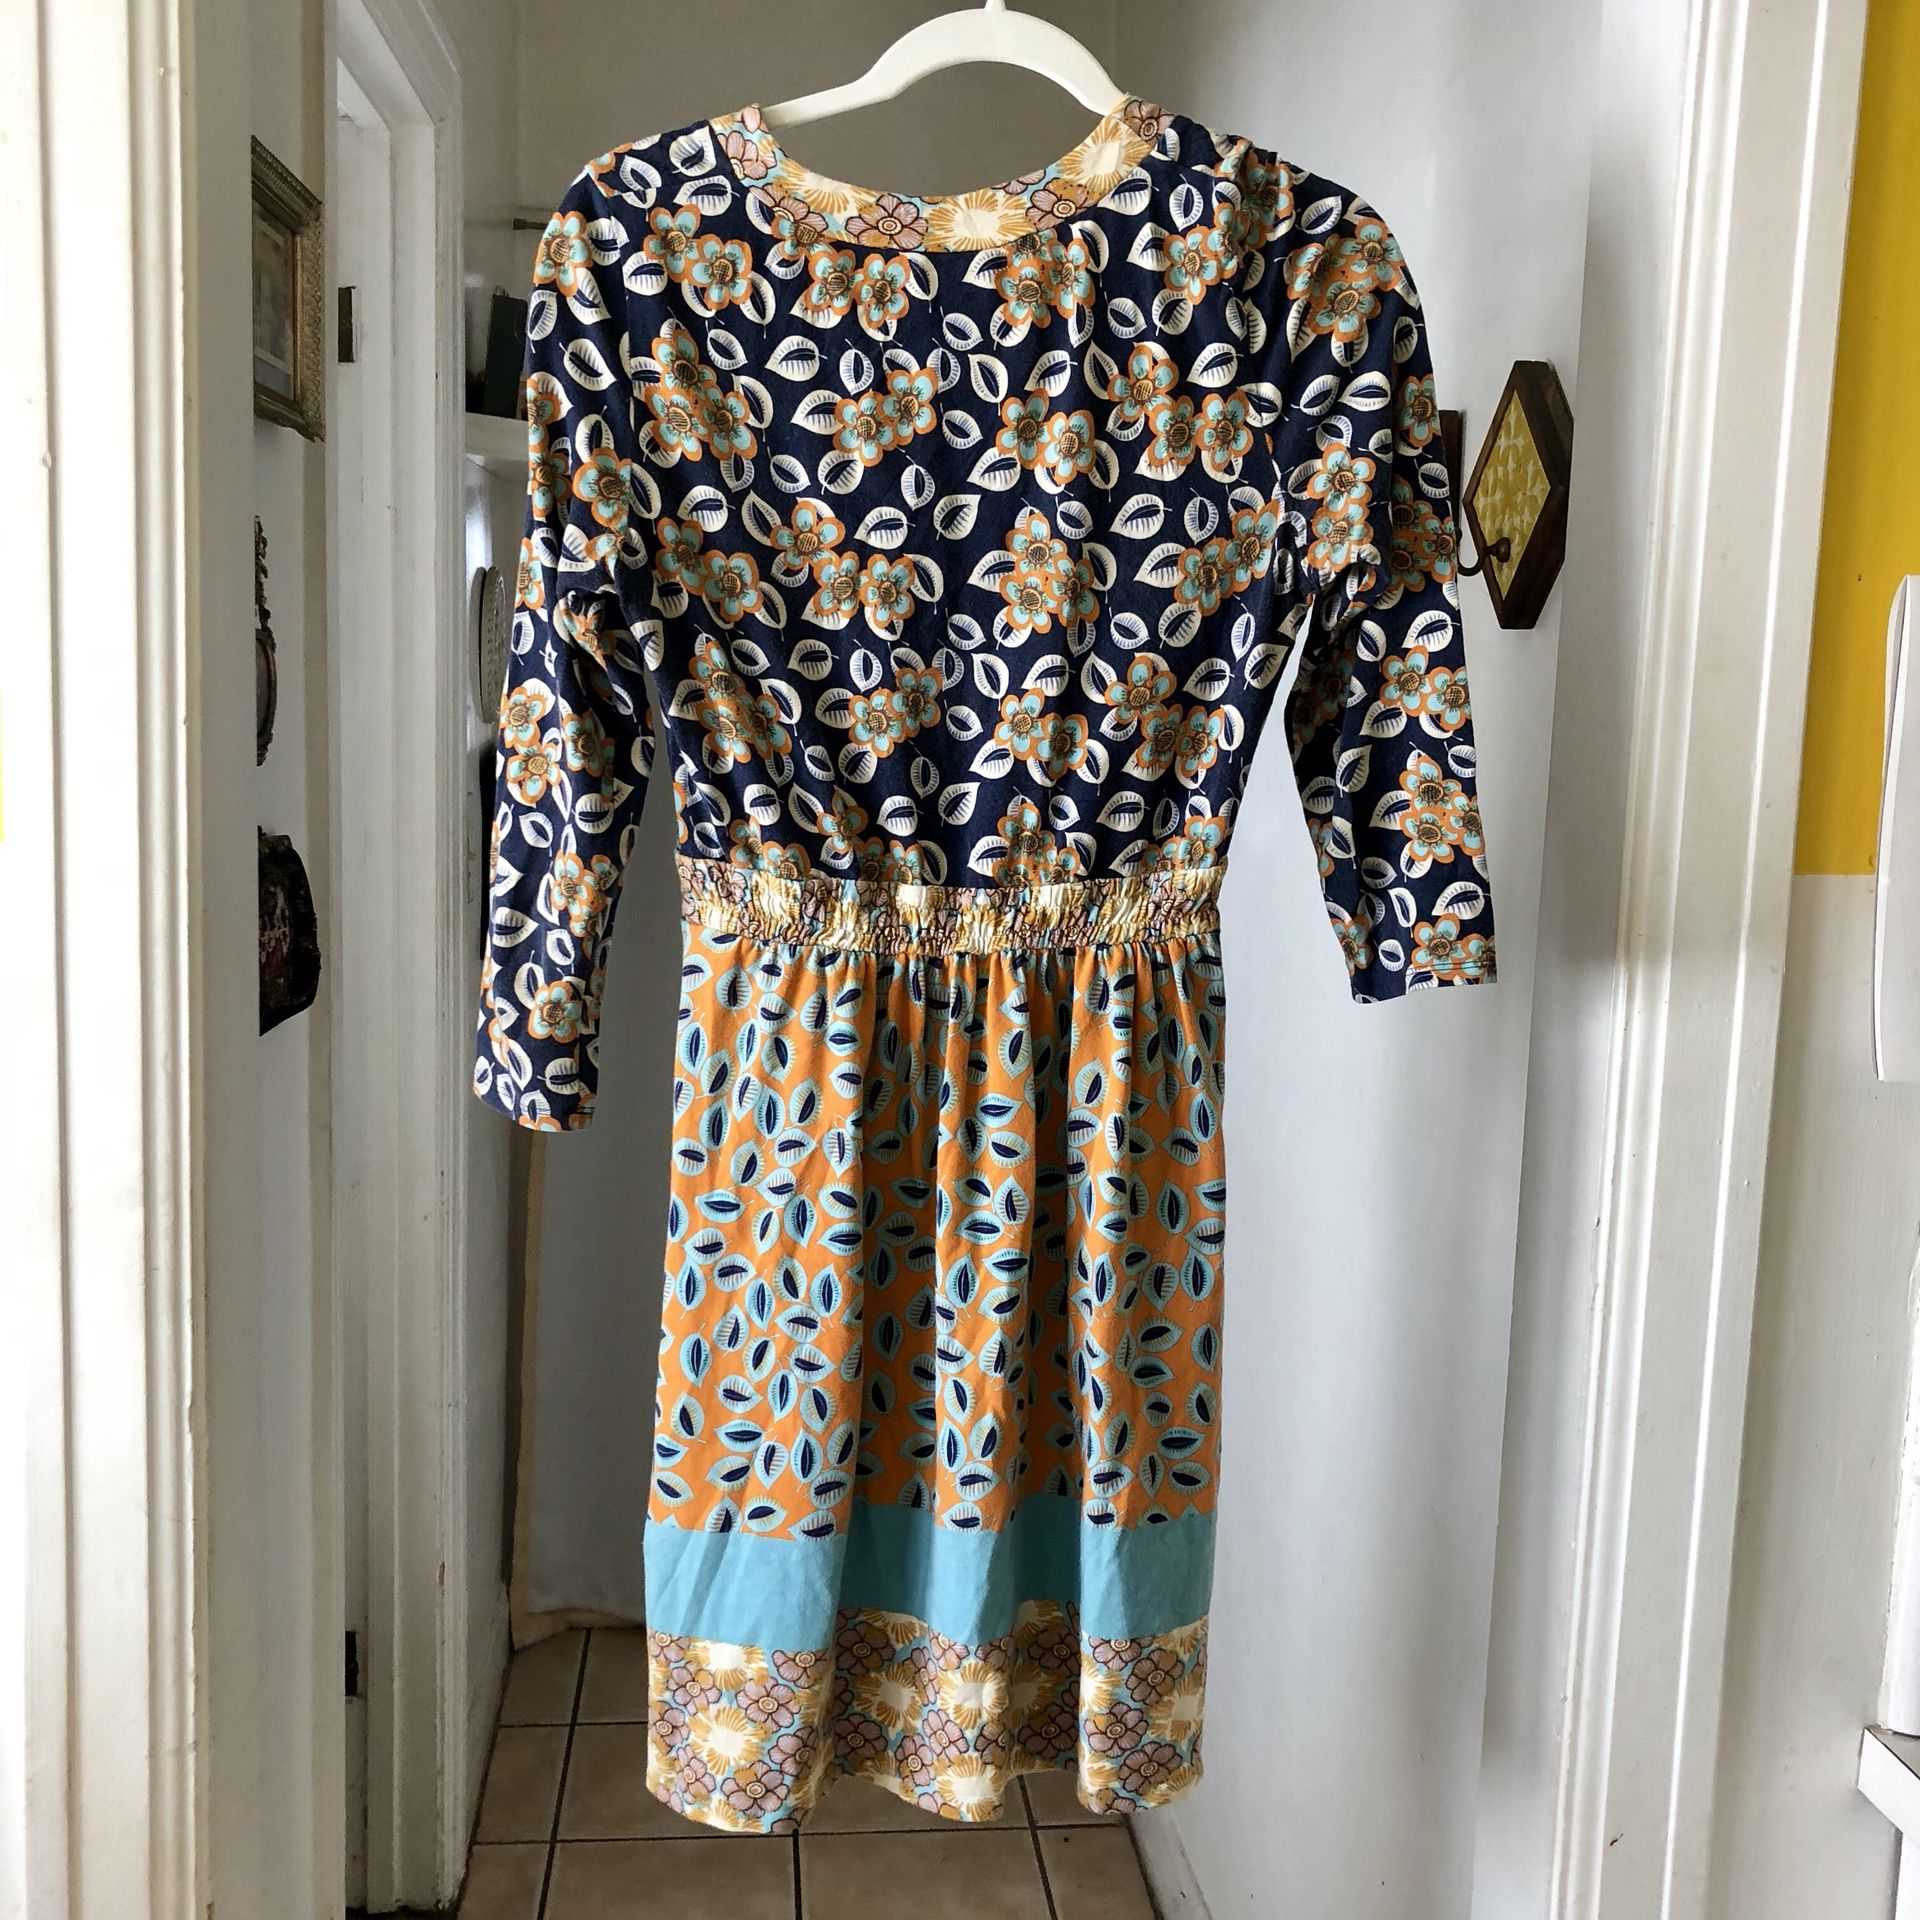 Anthropologie Pinkerton Dress for Sale in San Diego, CA - OfferUp